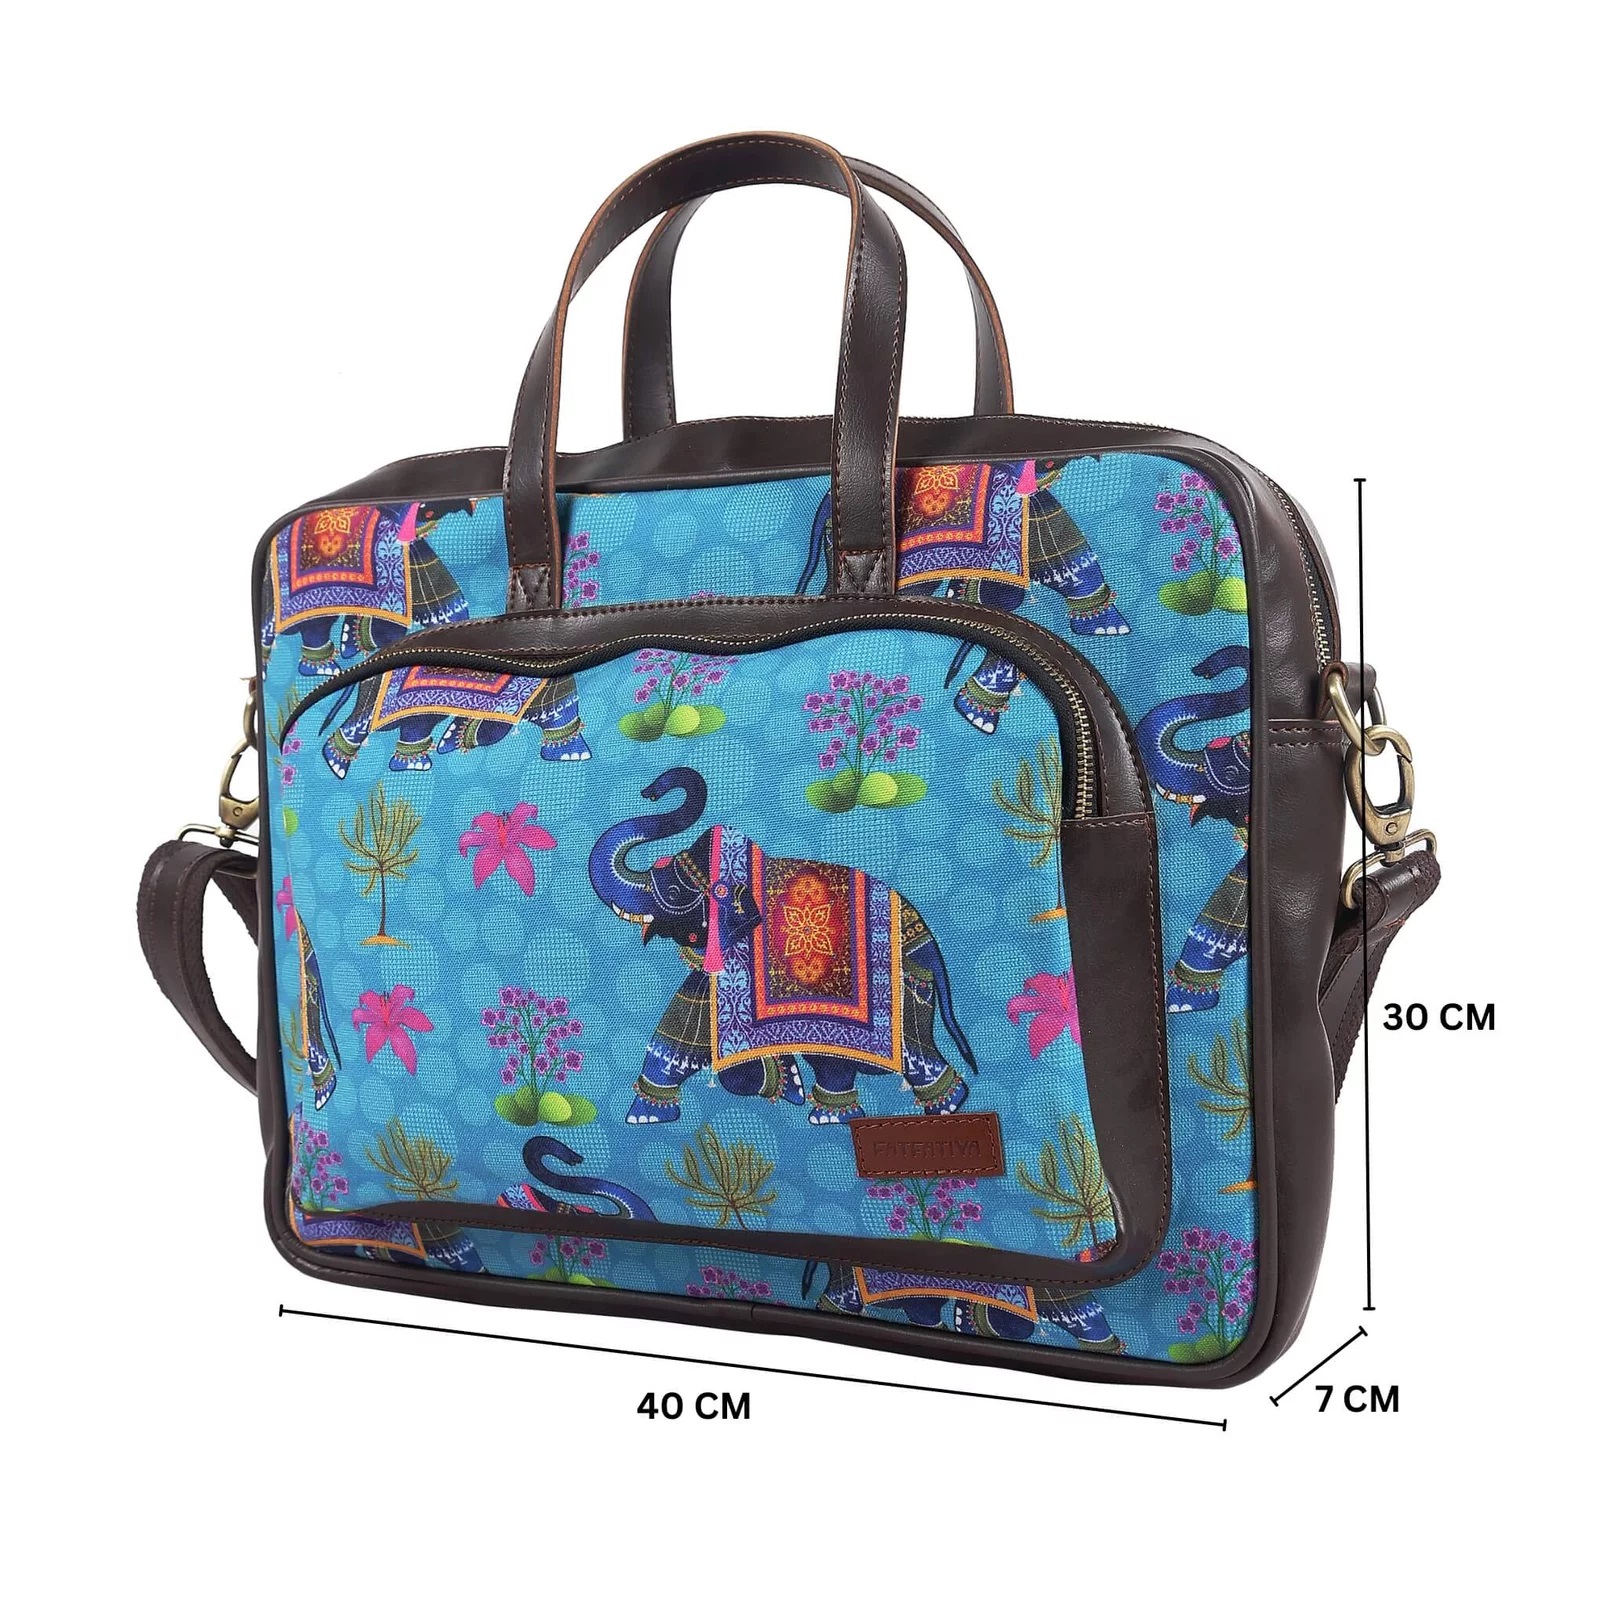 Designer Leather Laptop Bag For Women High Quality Shoulder Bag, Black  Cross Body Handbag Tote, Luxury Handbag, Casual Clutch P2 From Highend187,  $65.57 | DHgate.Com